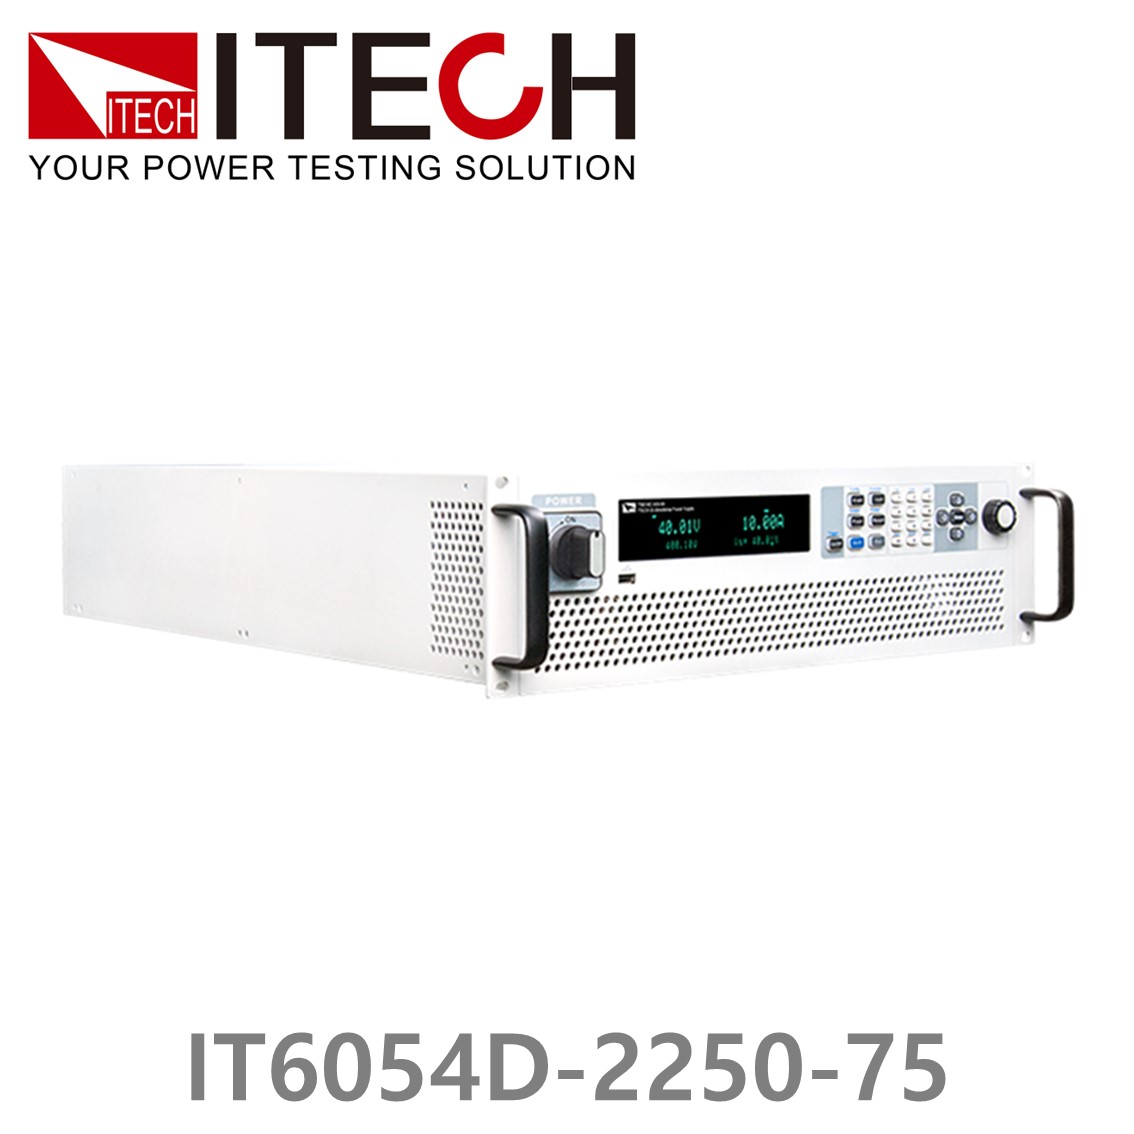 [ ITECH ] IT6054D-2250-75 고전력 프로그래머블 DC전원공급기 2250V/75A/54kW